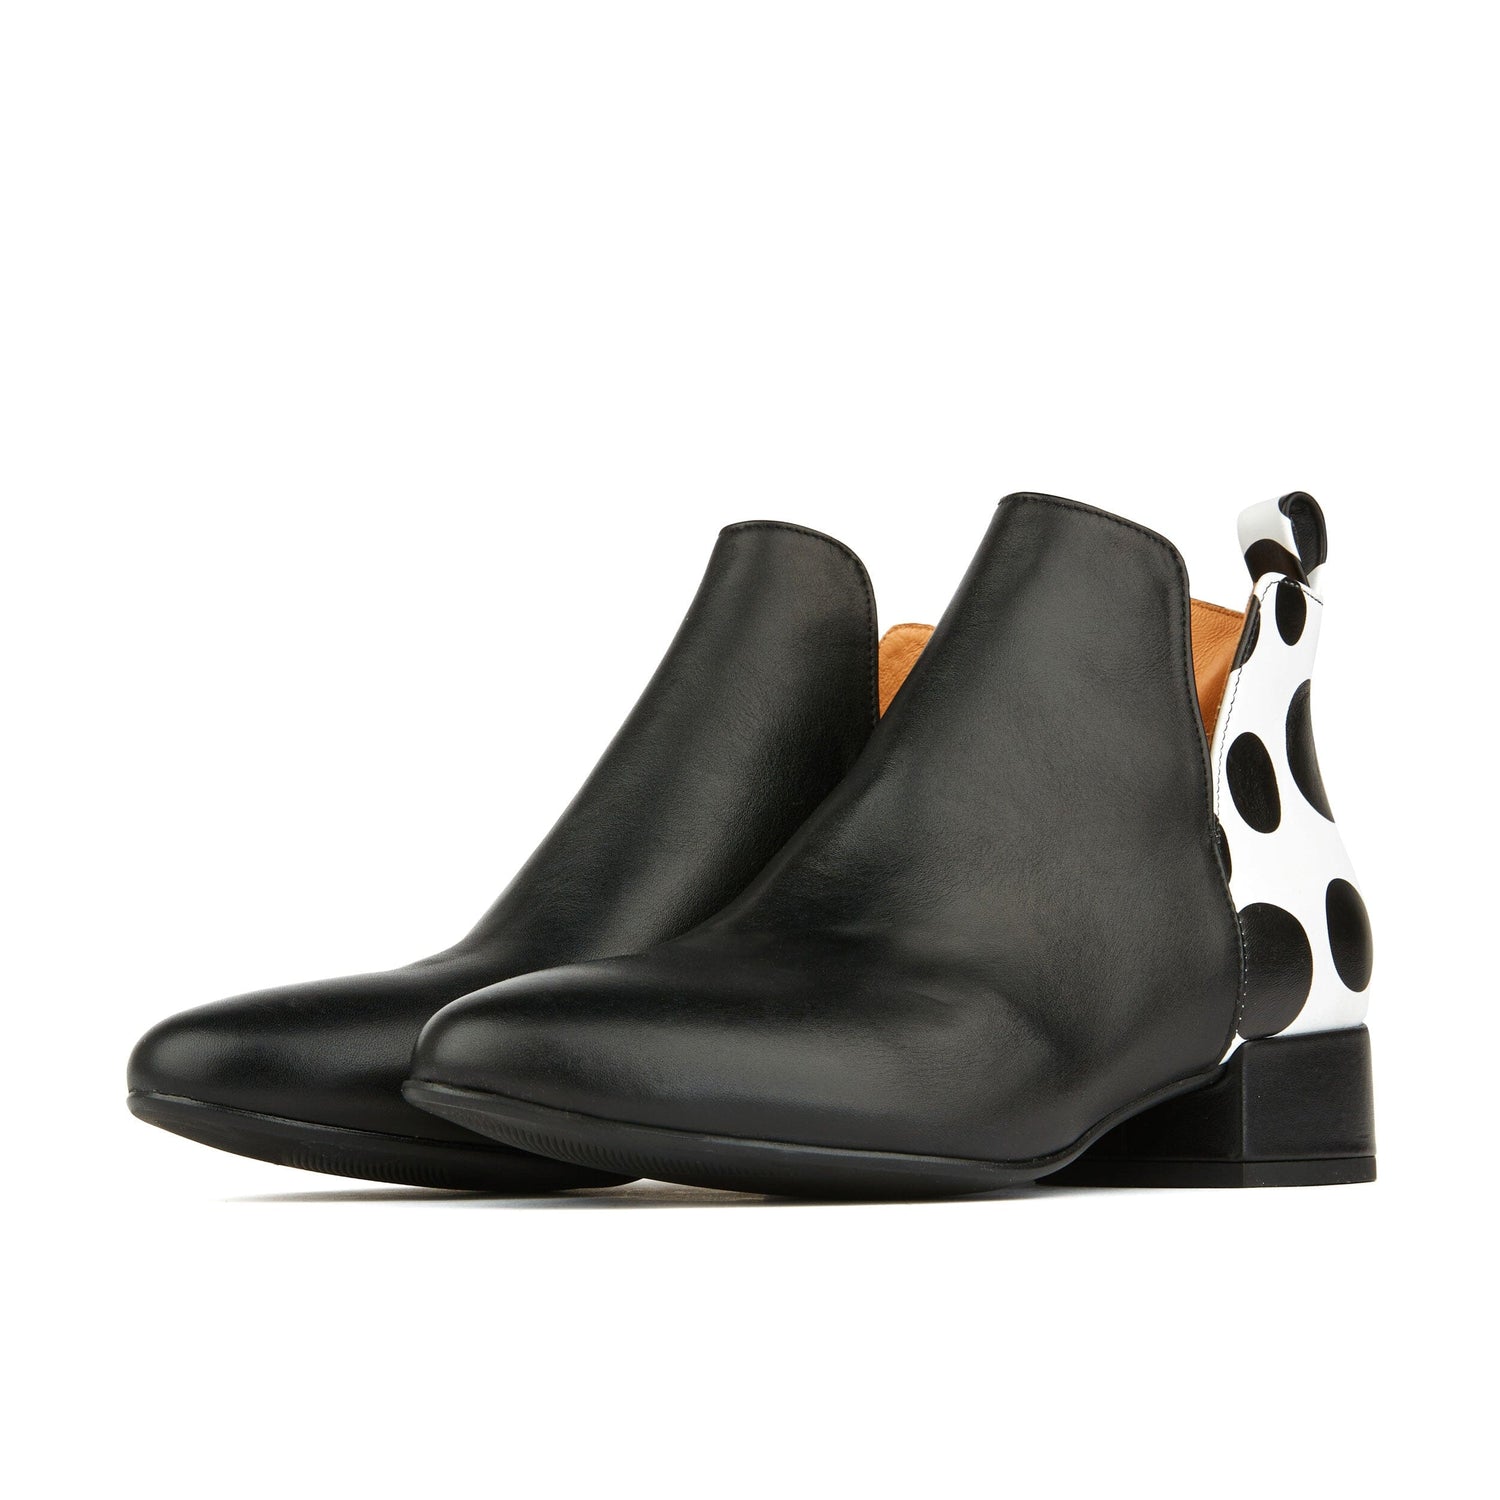 Twiggy - Black & White Polka Womens Ankle Boots Embassy London 